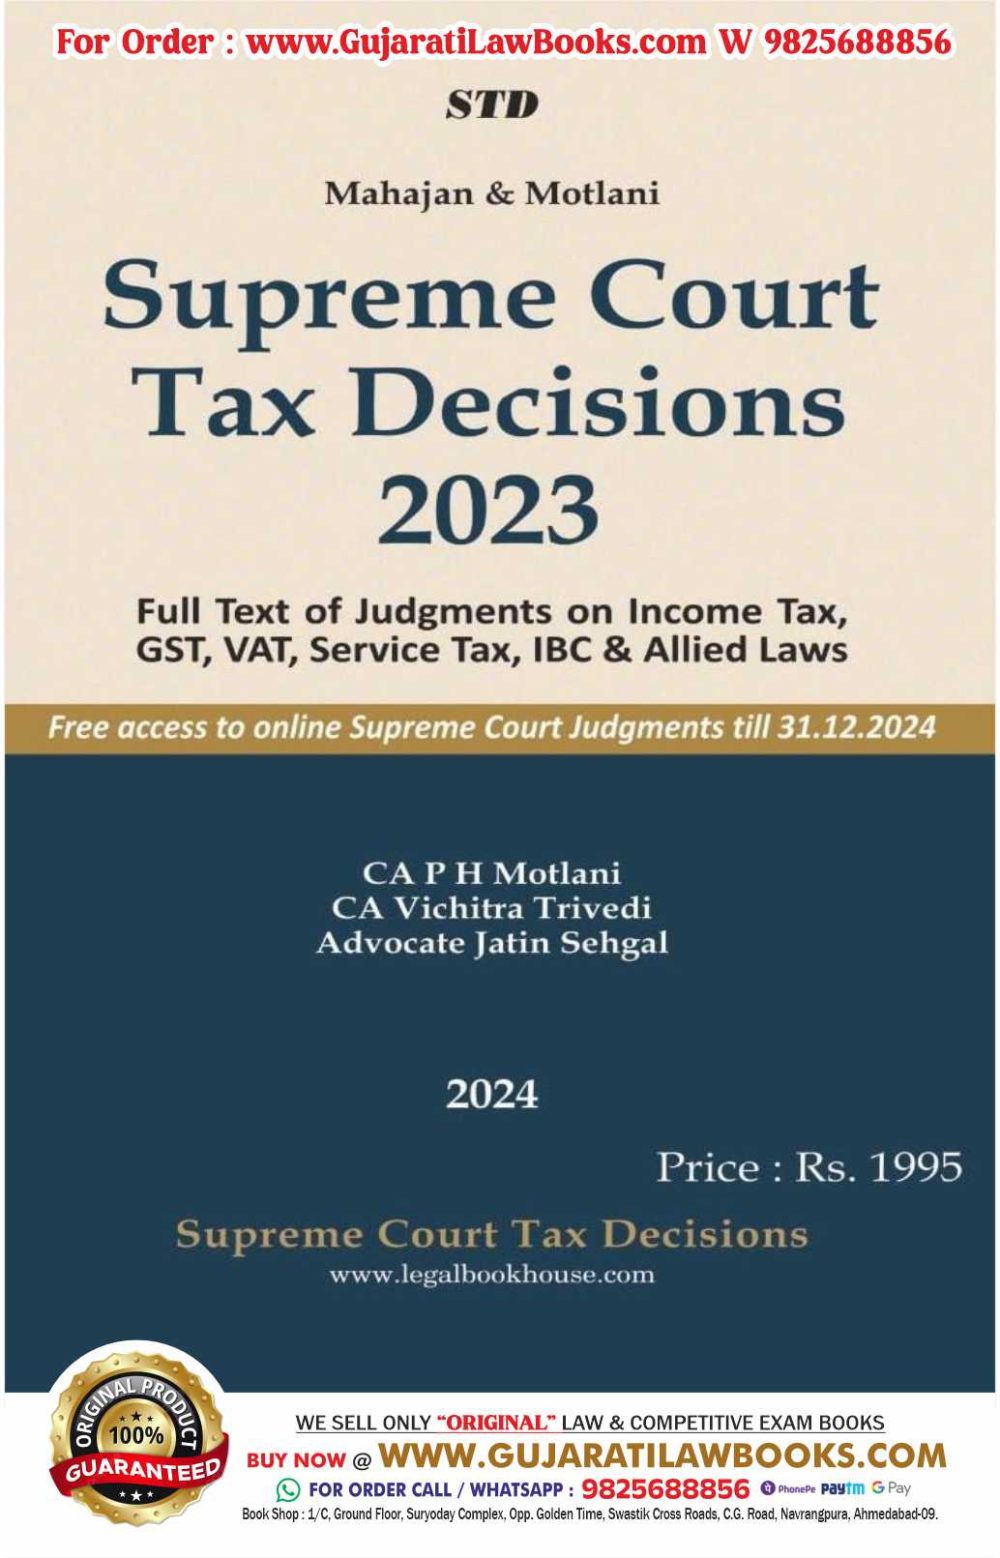 Supreme Court Tax Decisions 2023 by Mahajan & Motlani - Latest March 2024 Edition